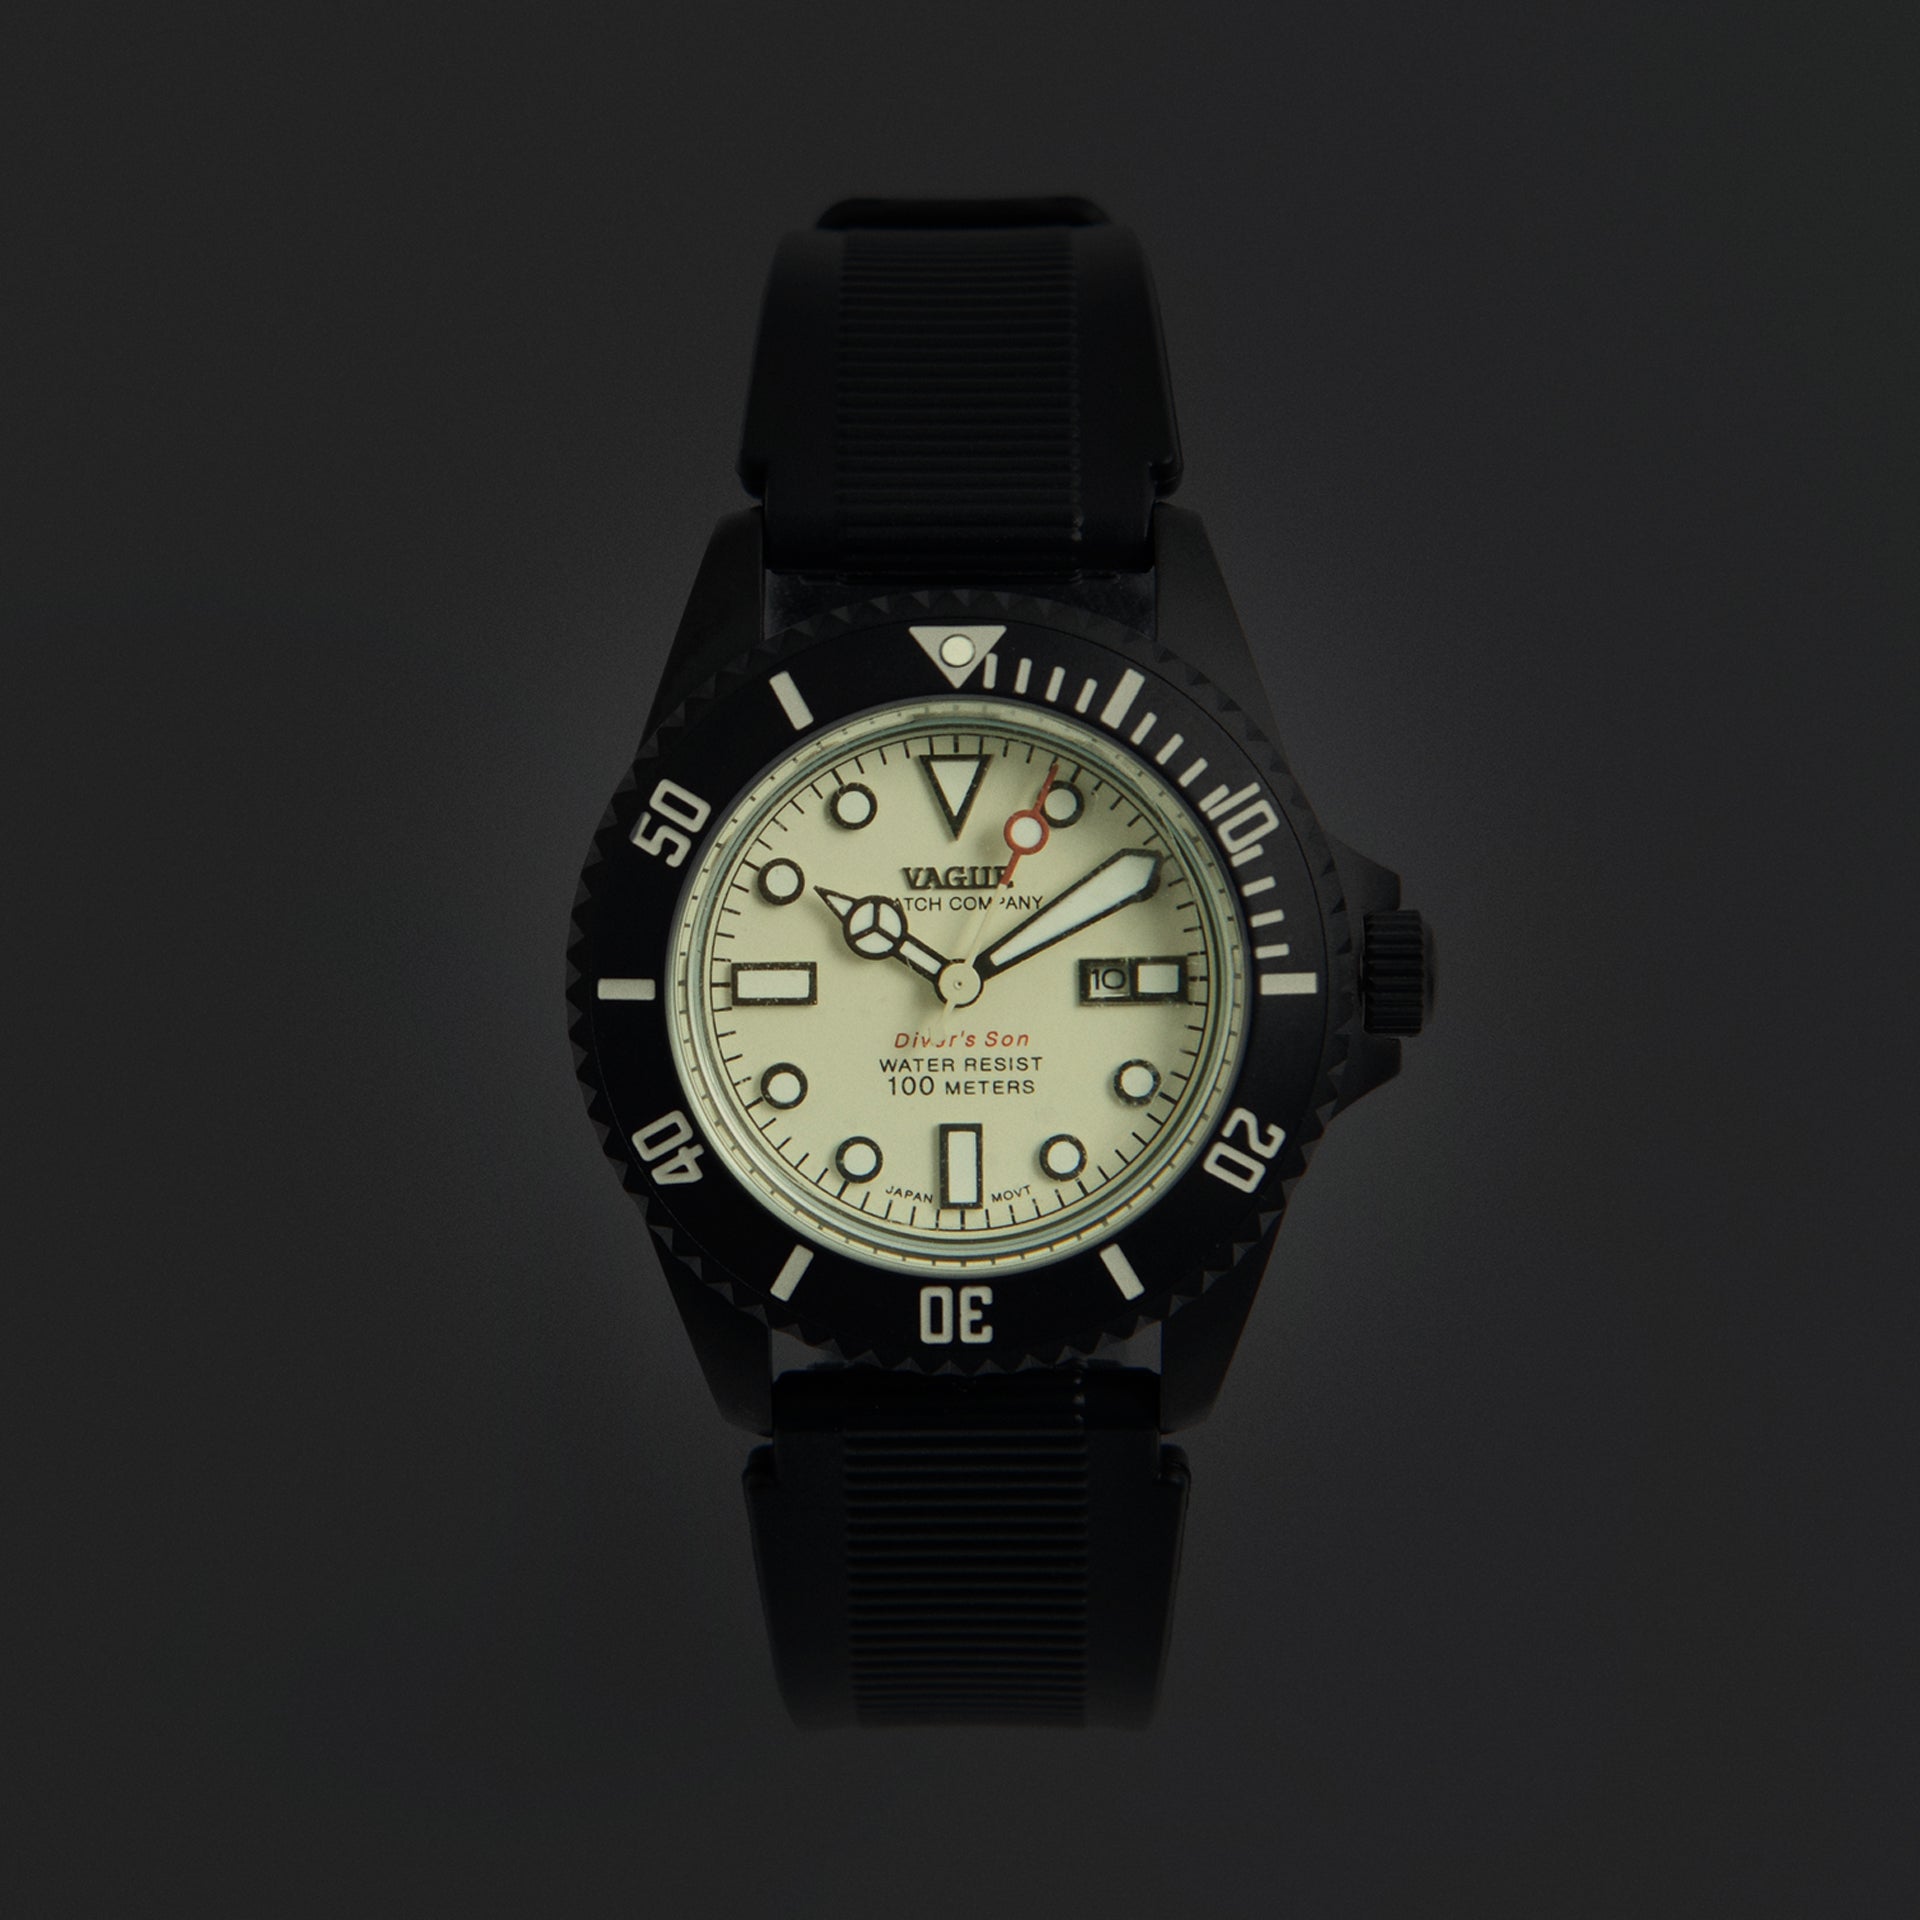 Pin by Megha Soman on W@tCh LoVeR | Apple watch, Watches, Smart watch